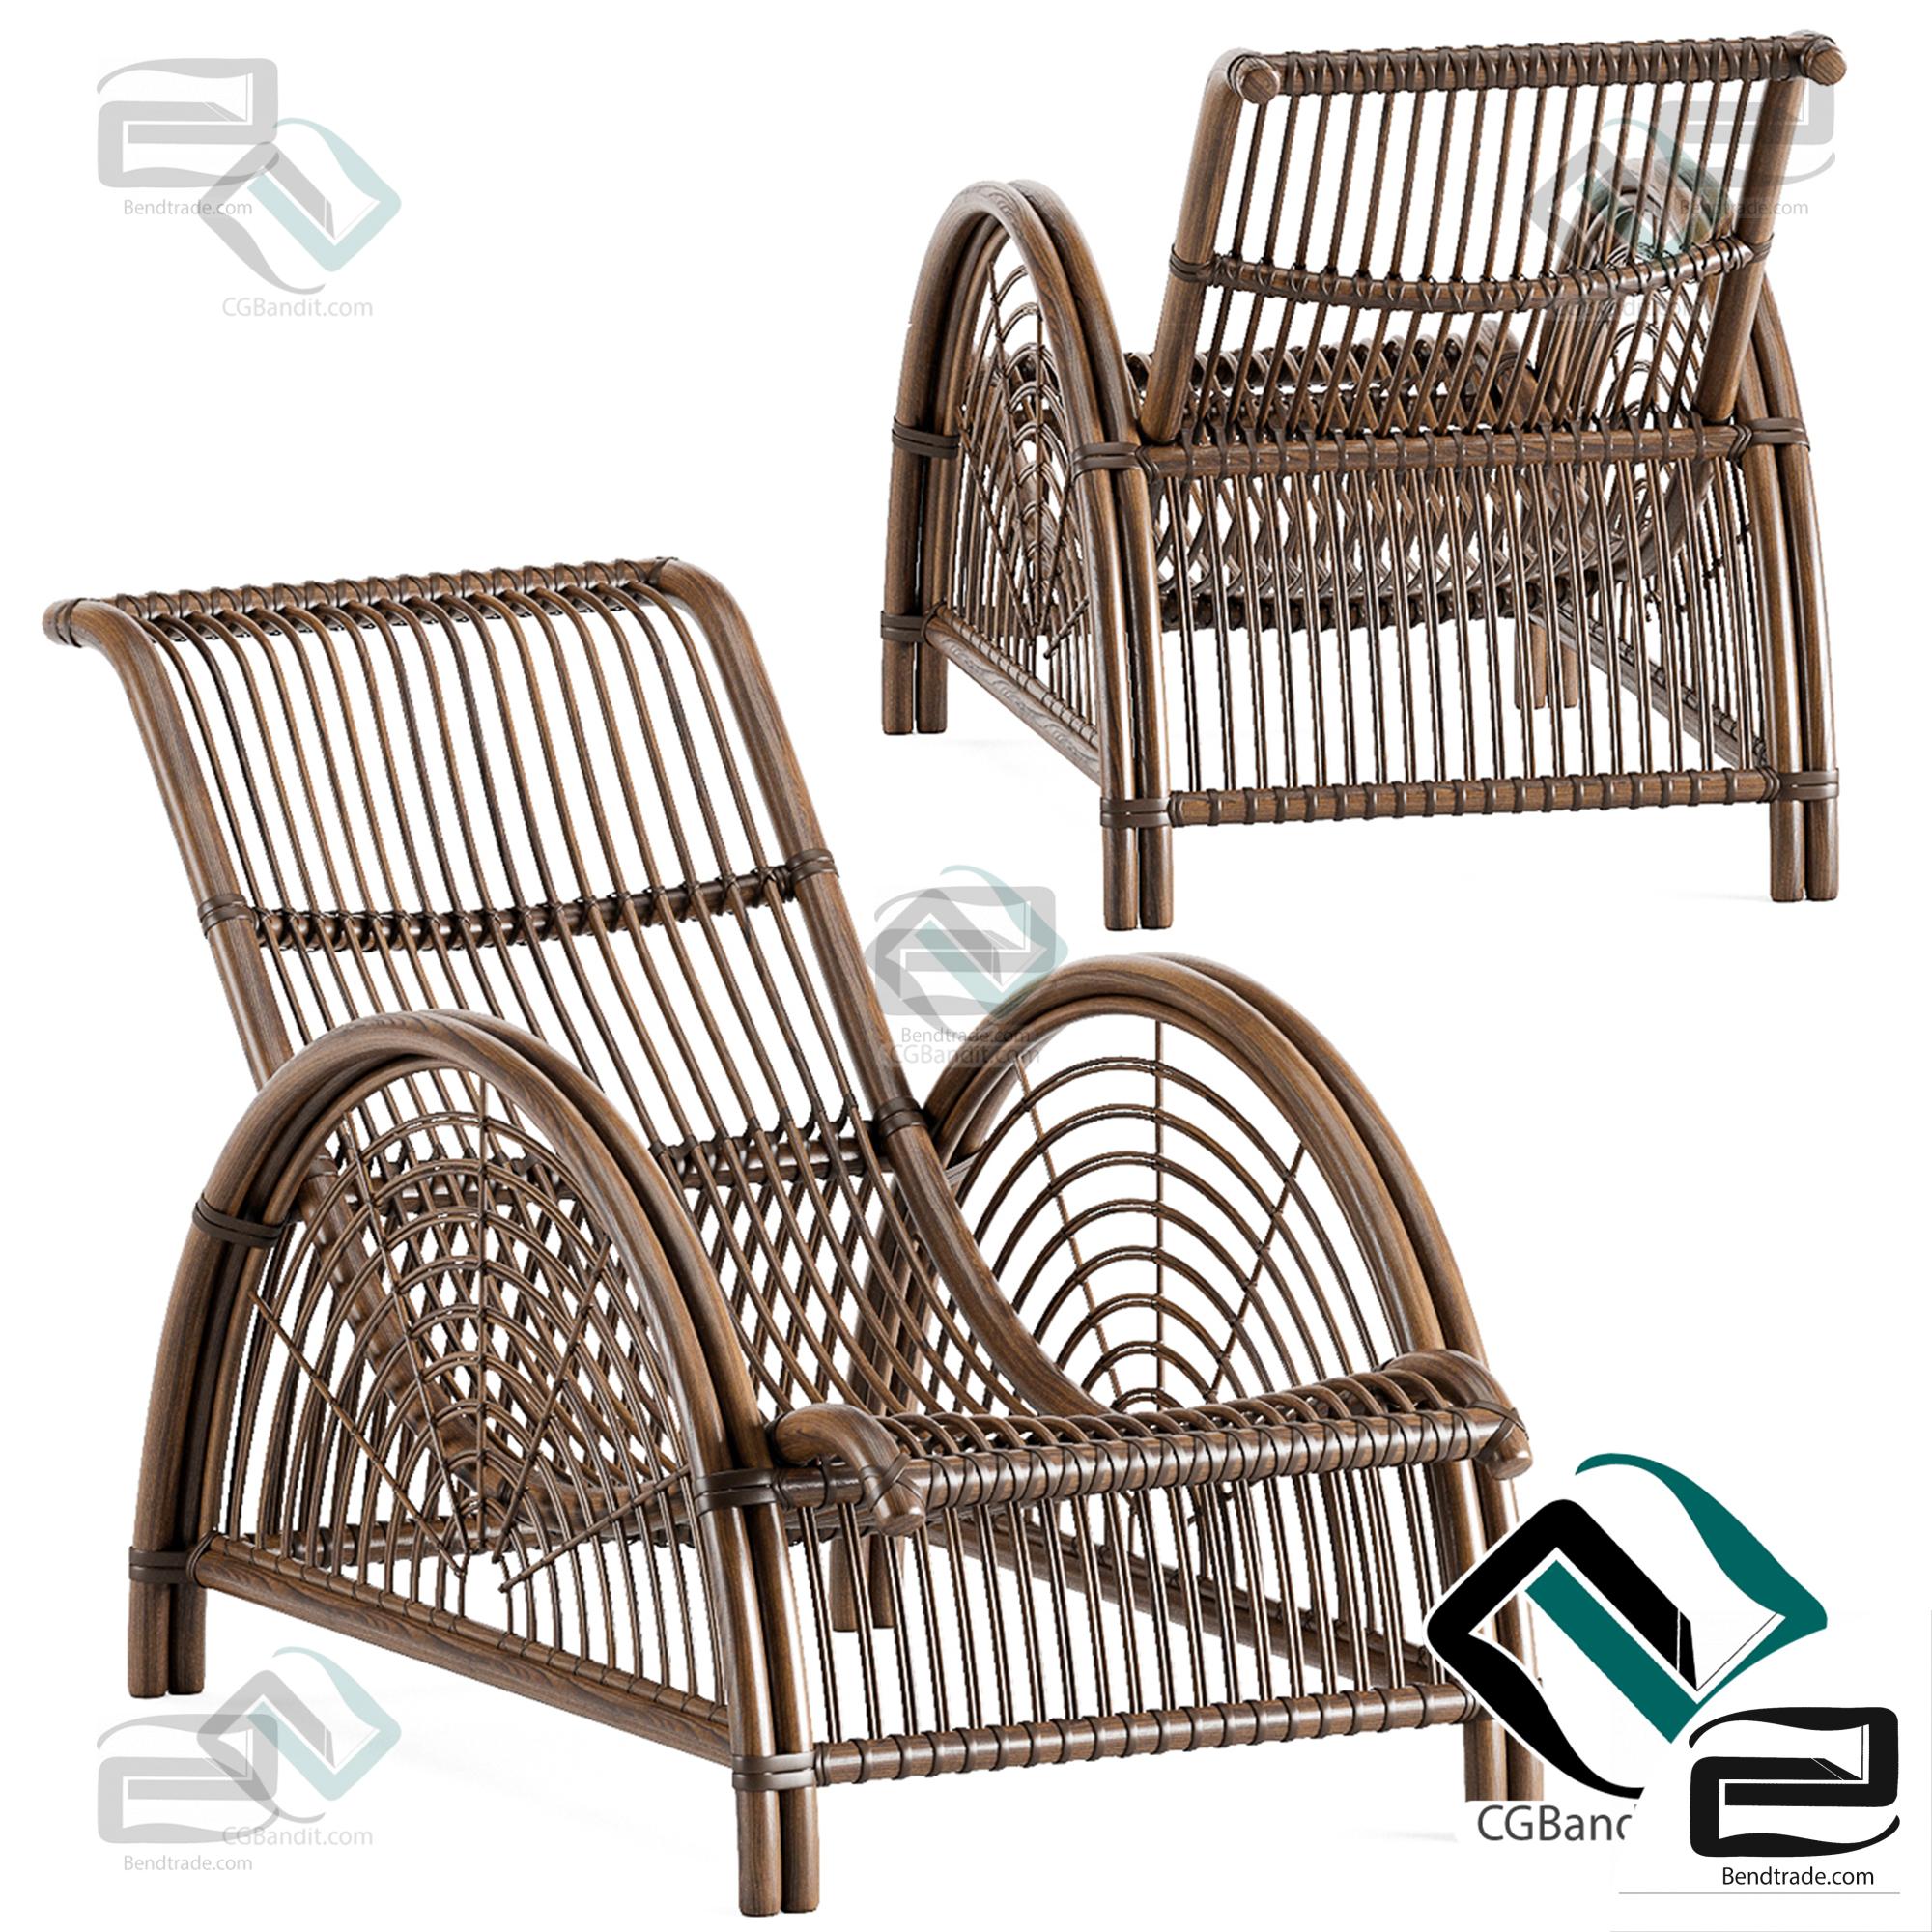 Reelak Suspension Chair 3D model download on Bendtrade in 3d max, 3ds, obj,  fbx format, Vray materials, Corona Render